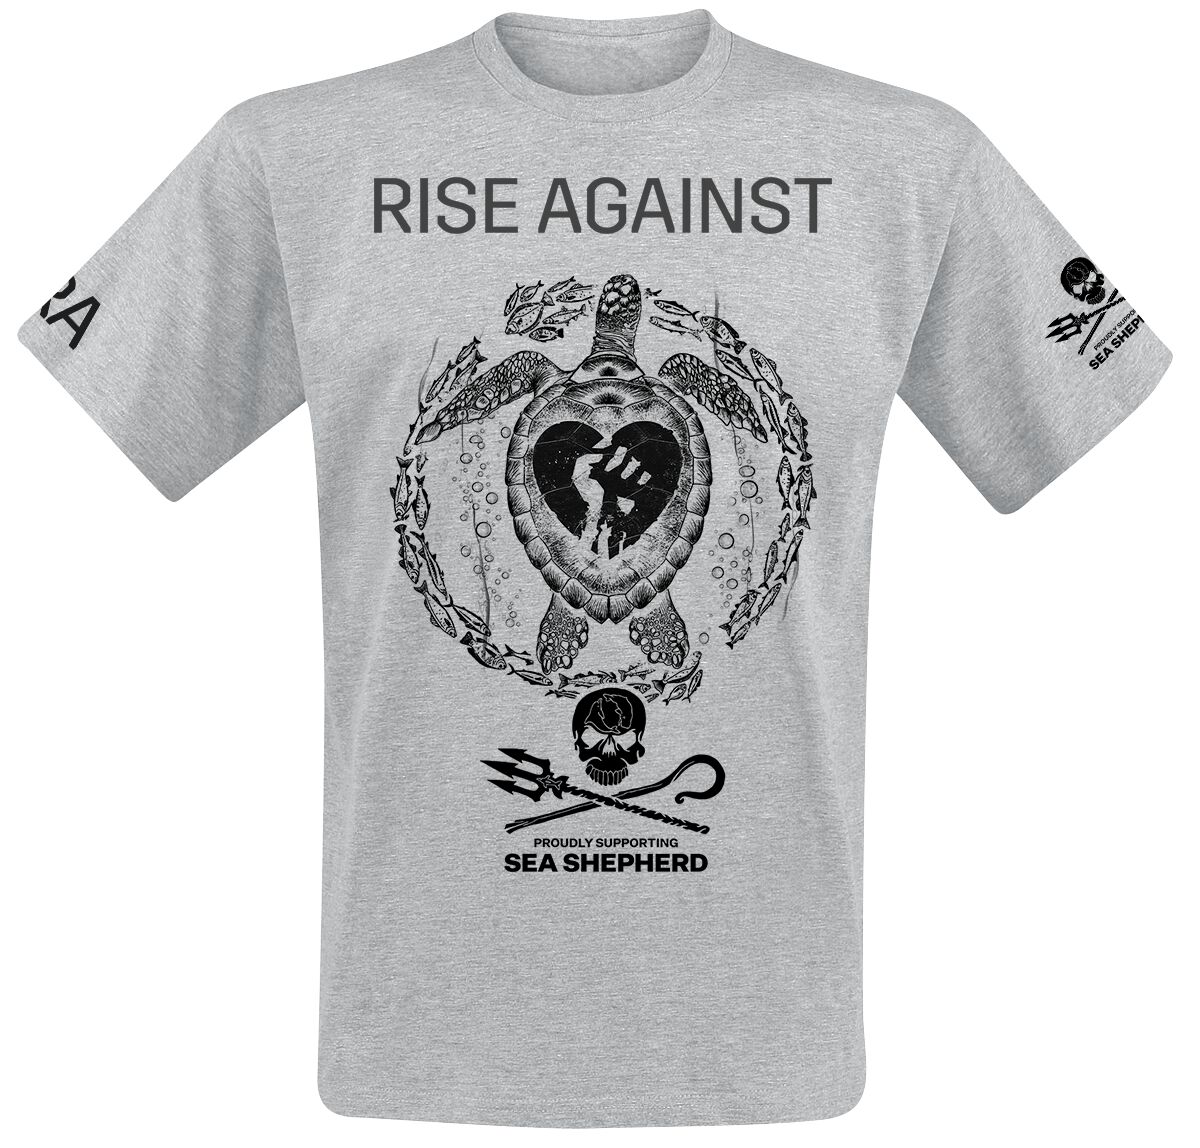 Rise Against T-Shirt - Sea Shepherd Cooperation - Our Precious Time Is Running Out - S bis 3XL - für Männer - Größe 3XL - grau meliert  - EMP